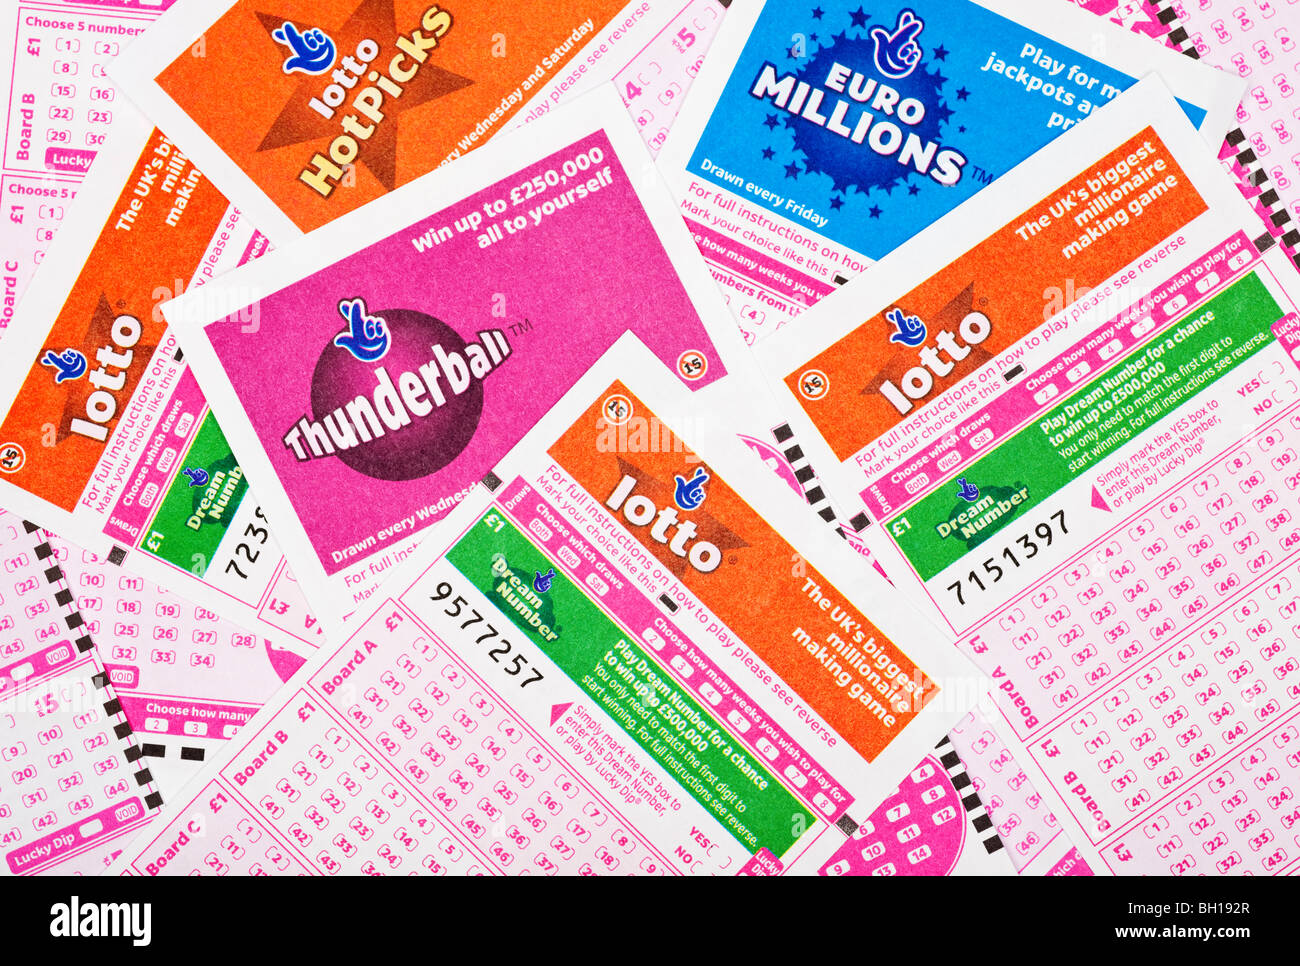 national lottery lotto hotpicks